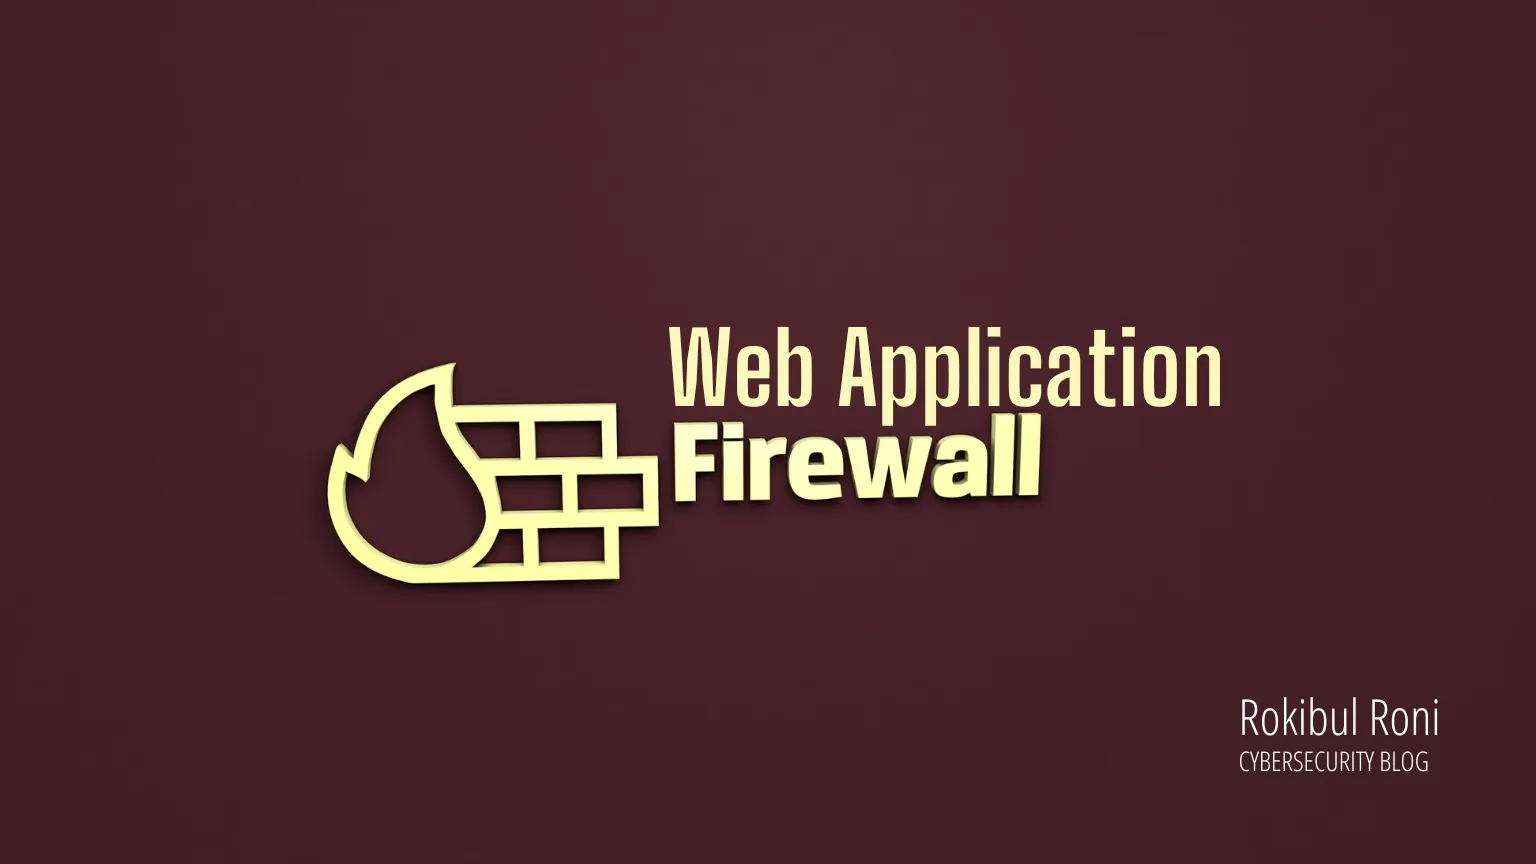 A Web Application Firewall